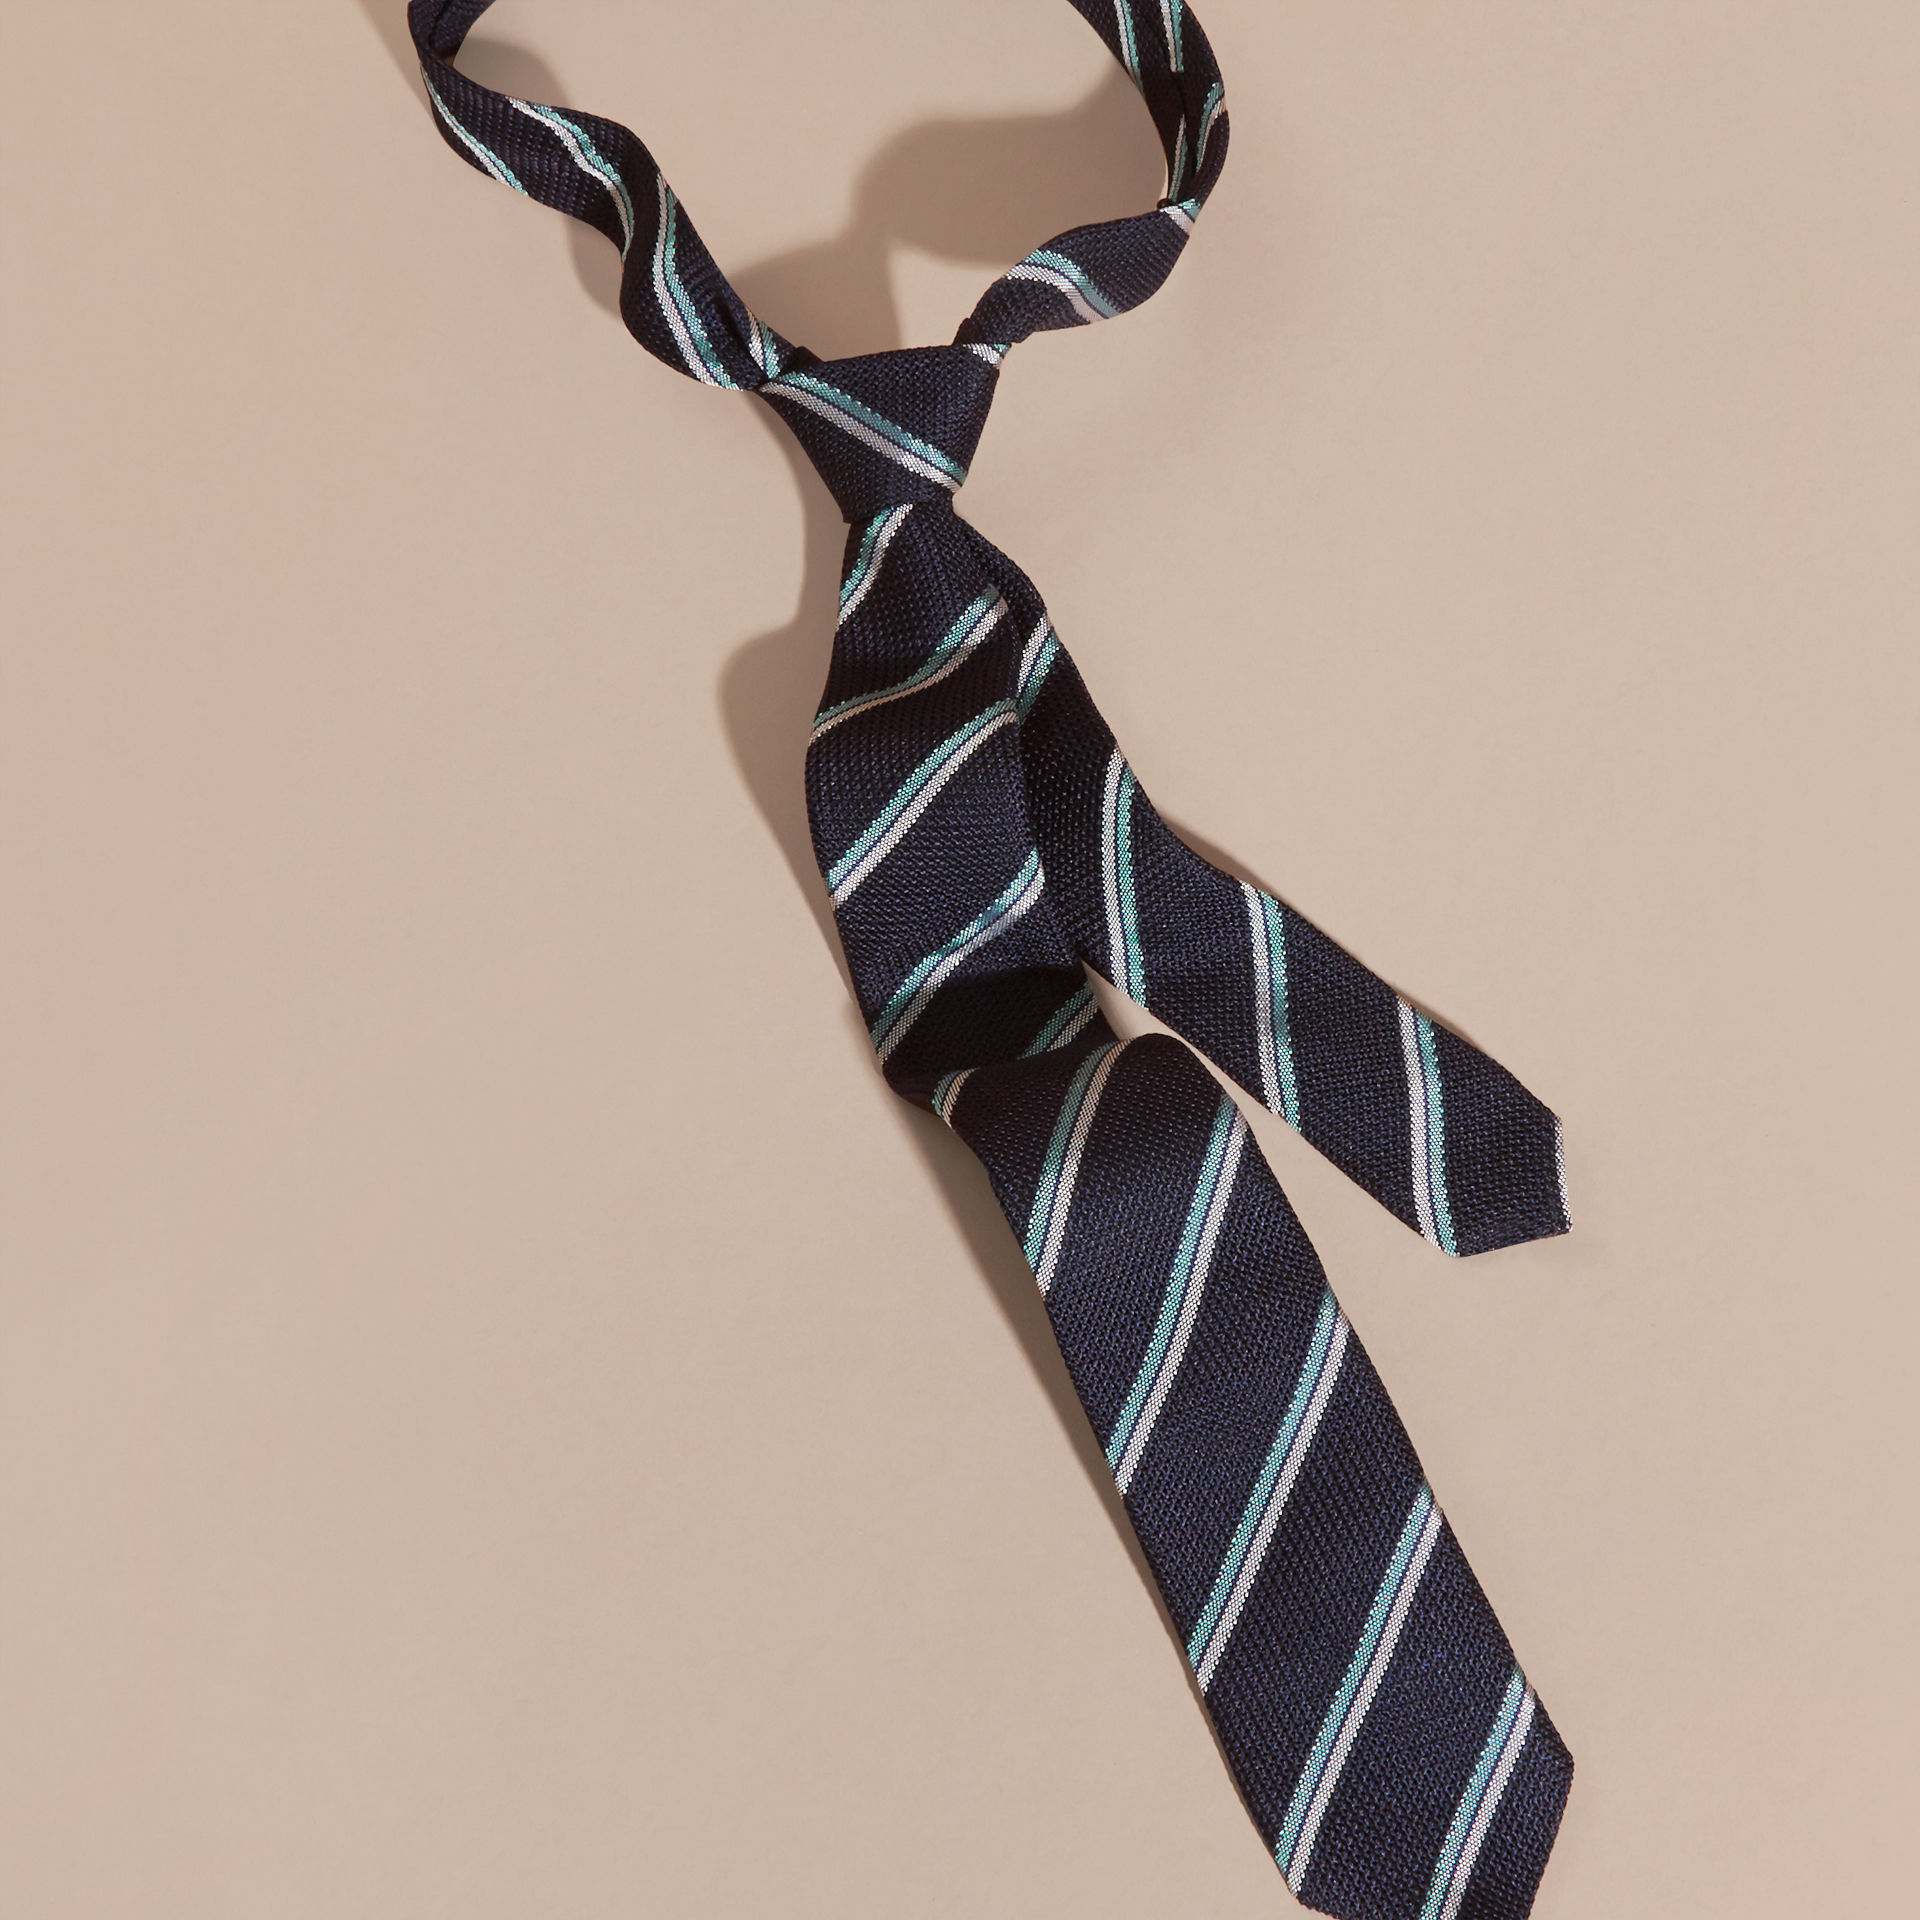 burberry ties wholesale